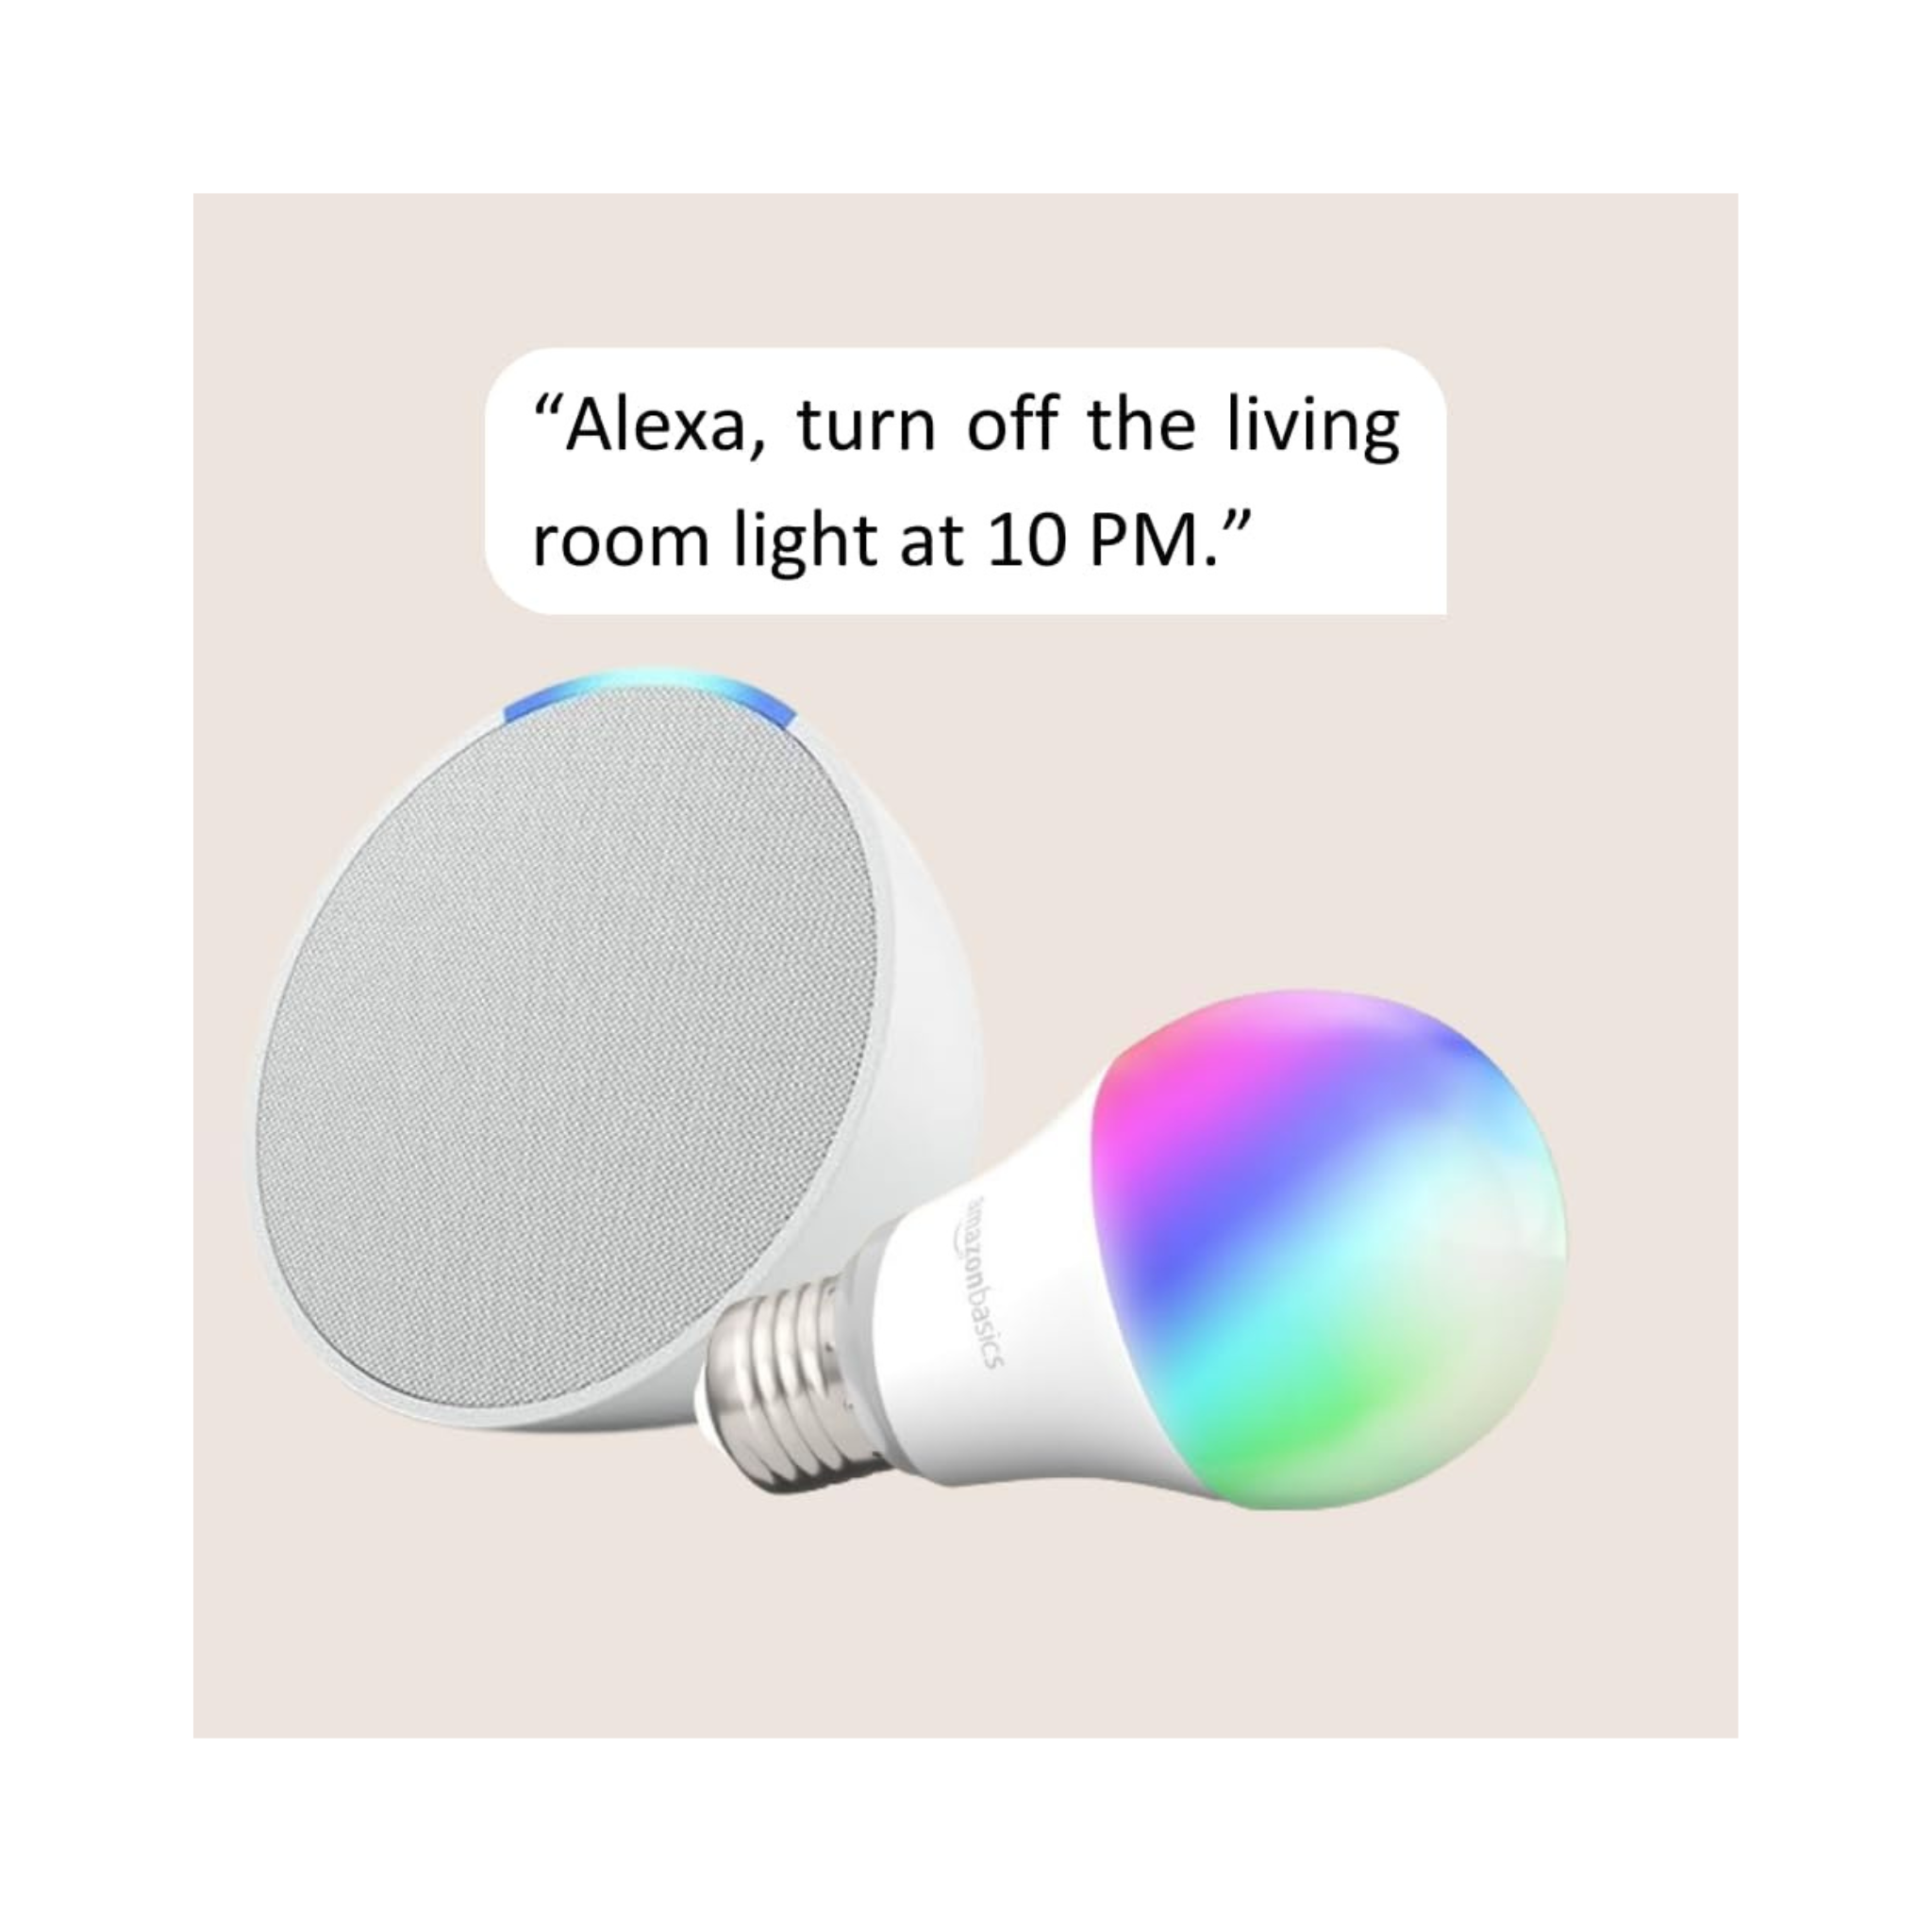 Amazon Echo Pop Compact Smart Speaker + Amazon Basics Smart A19 LED Light Bulb